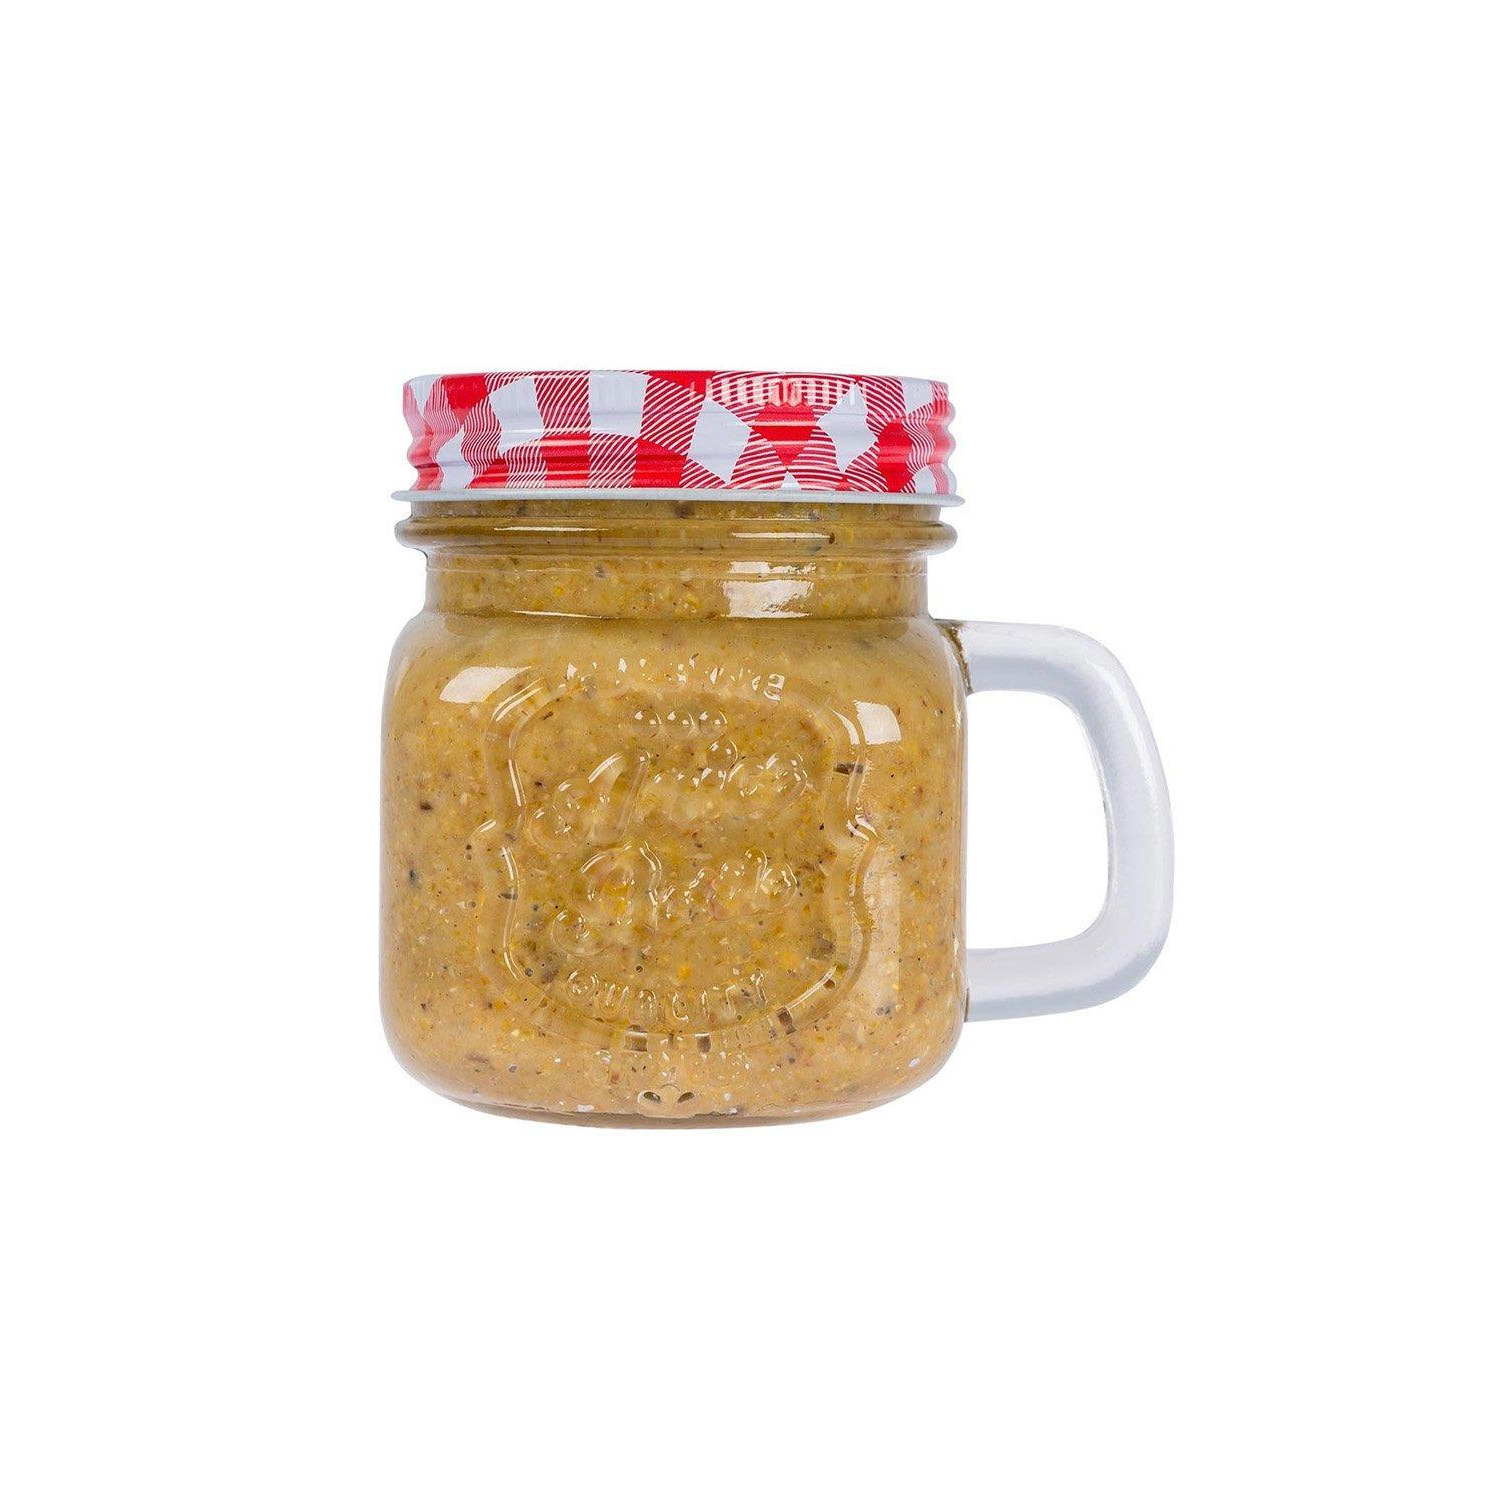 Peanut Butter Bird Feeder in Glass Jar - image 1